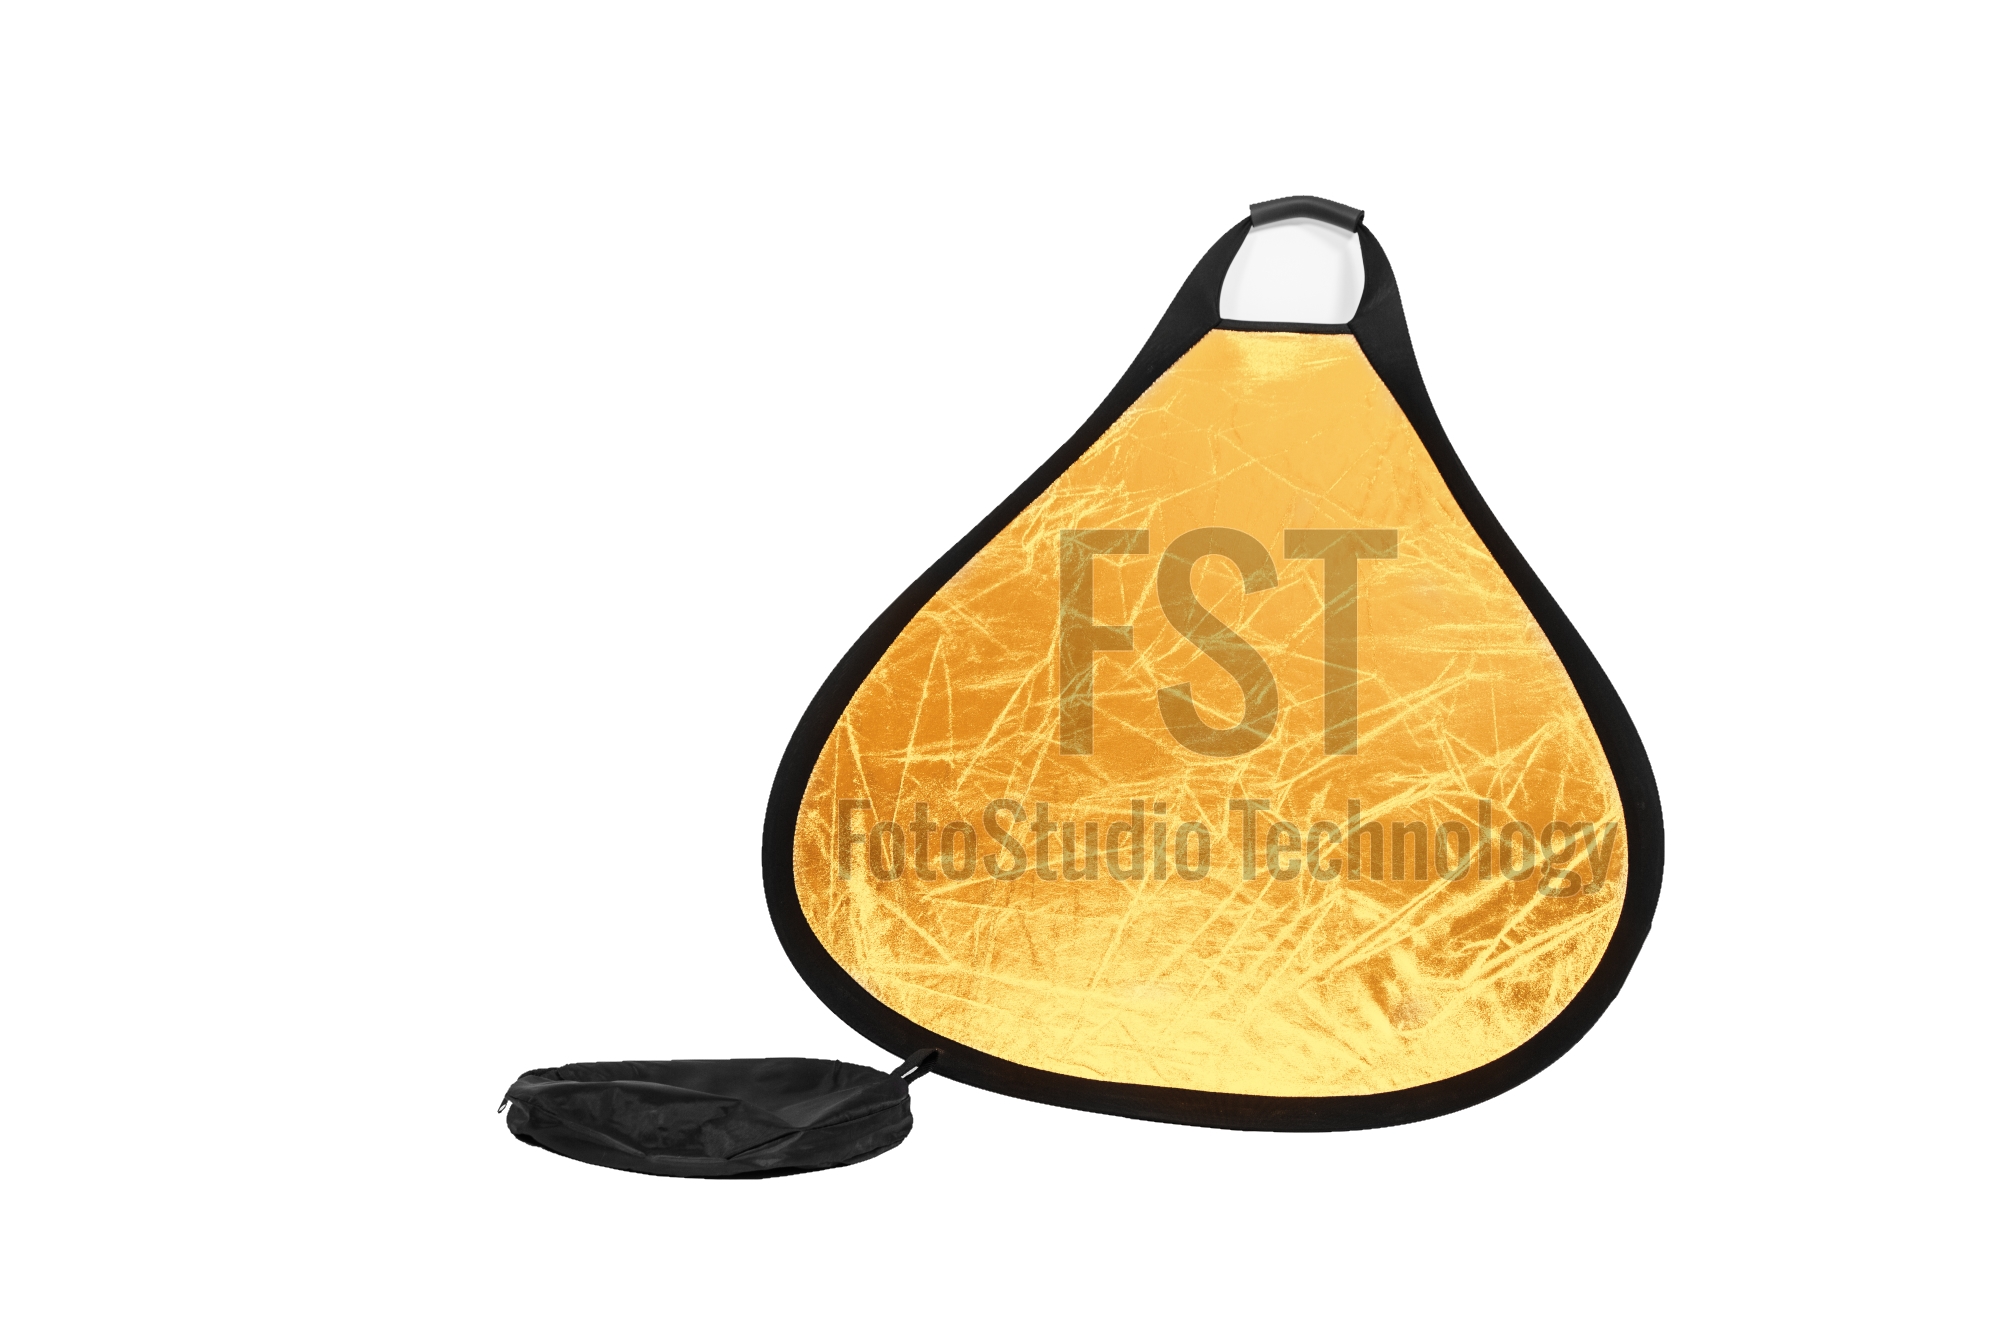   FST TR-051 30  Silver & Gold